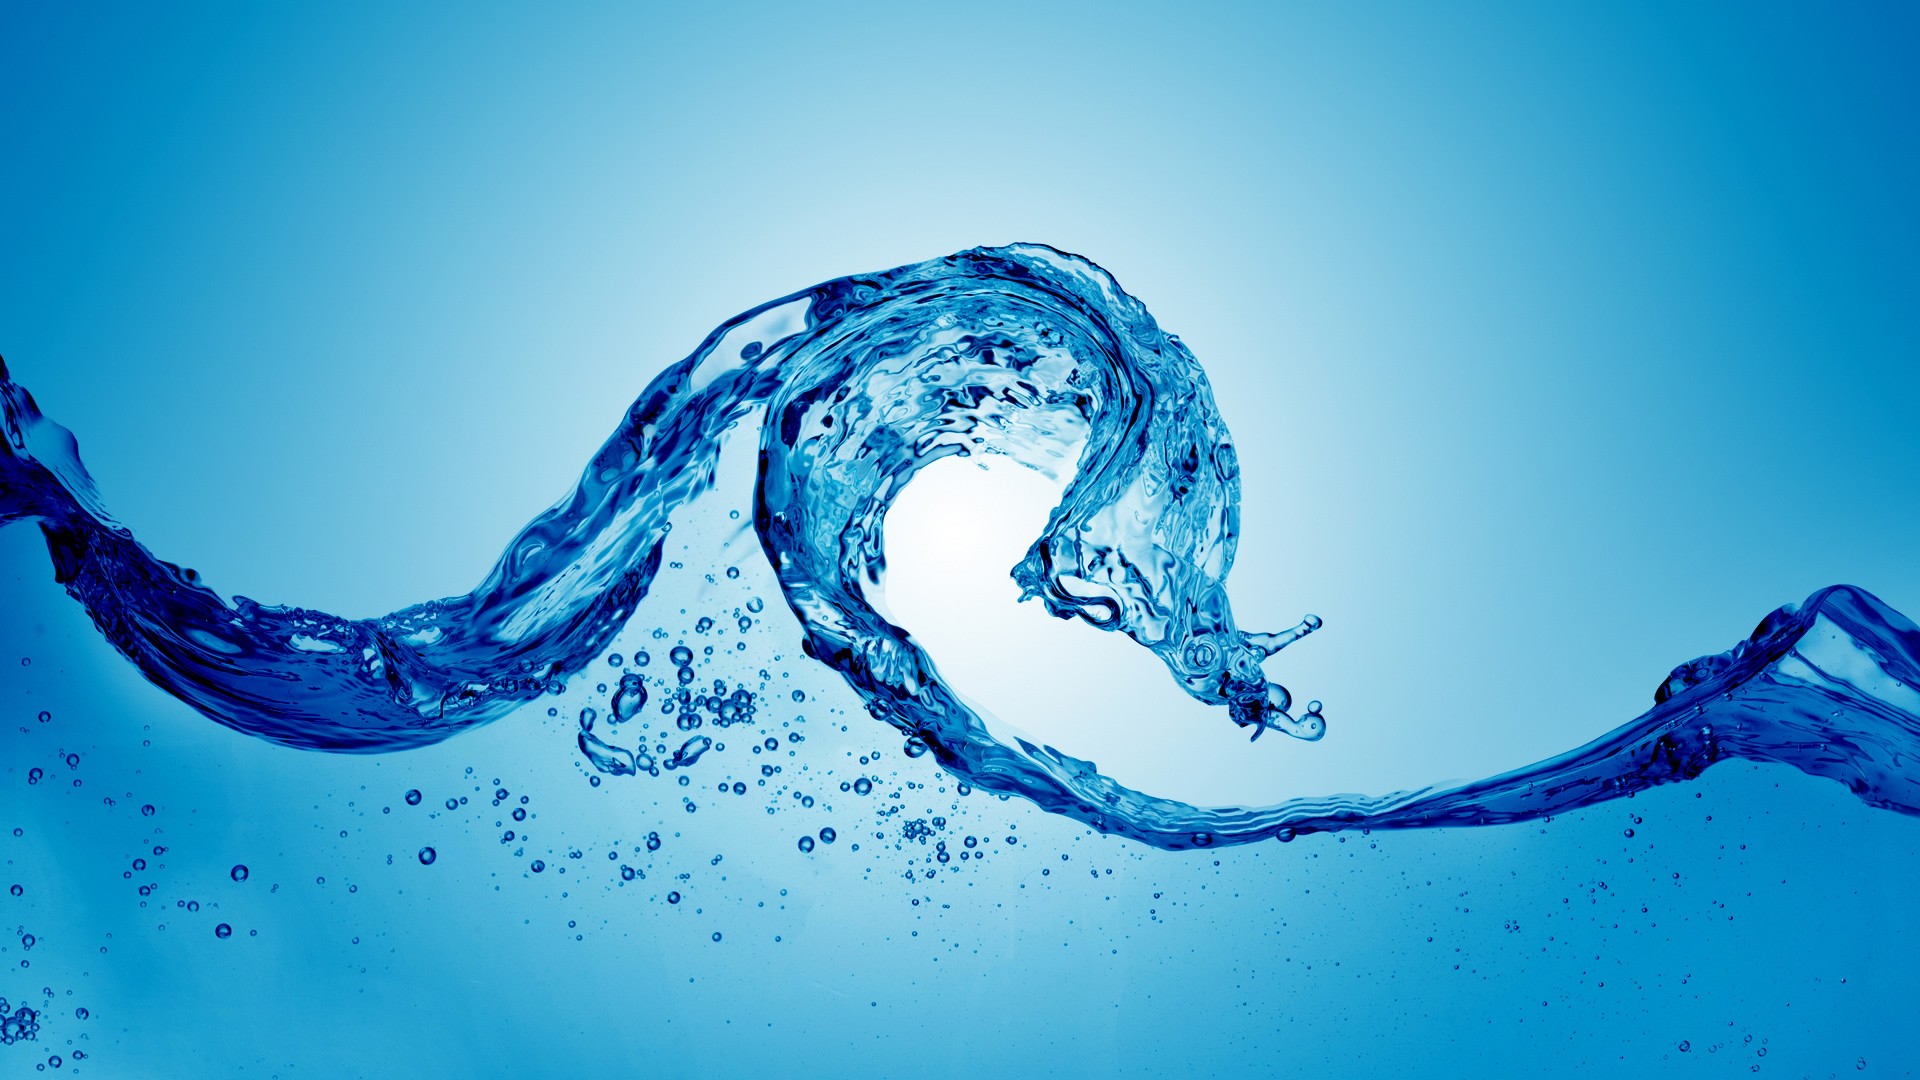 General 1920x1080 digital art water liquid blue background simple background cyan blue